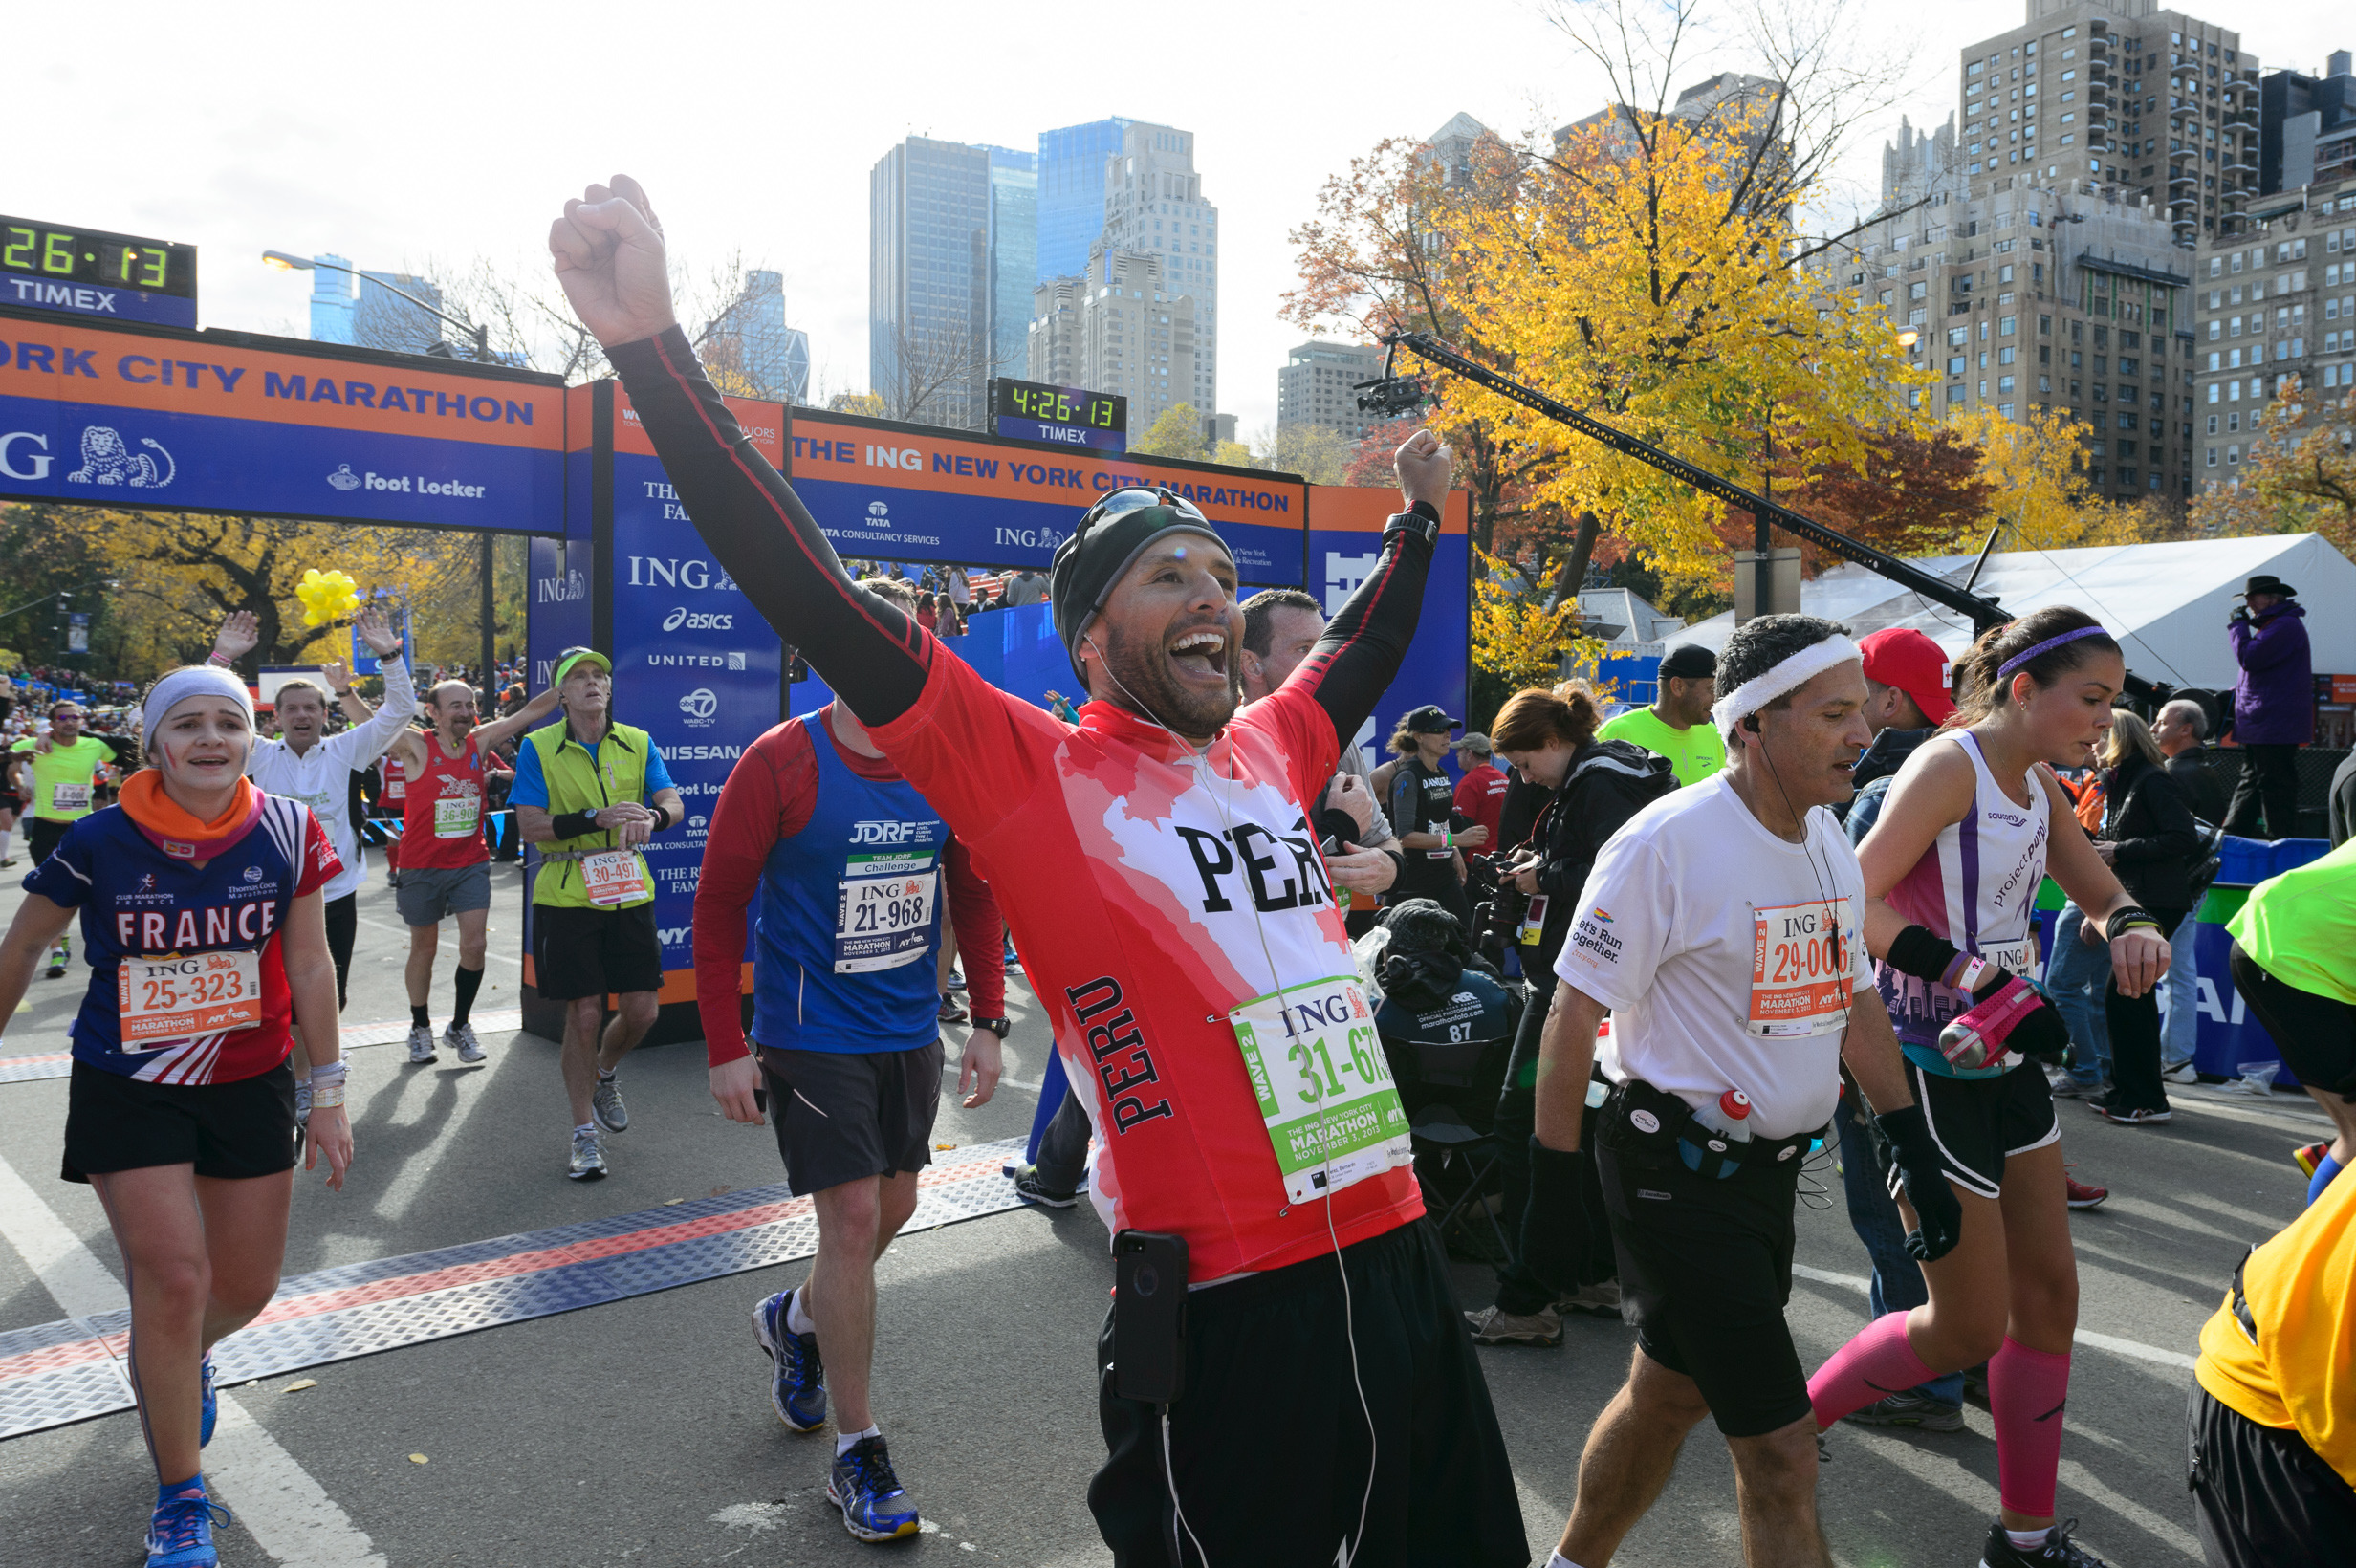 Watch NYC Marathon runners cross the finish line (slide show, video)